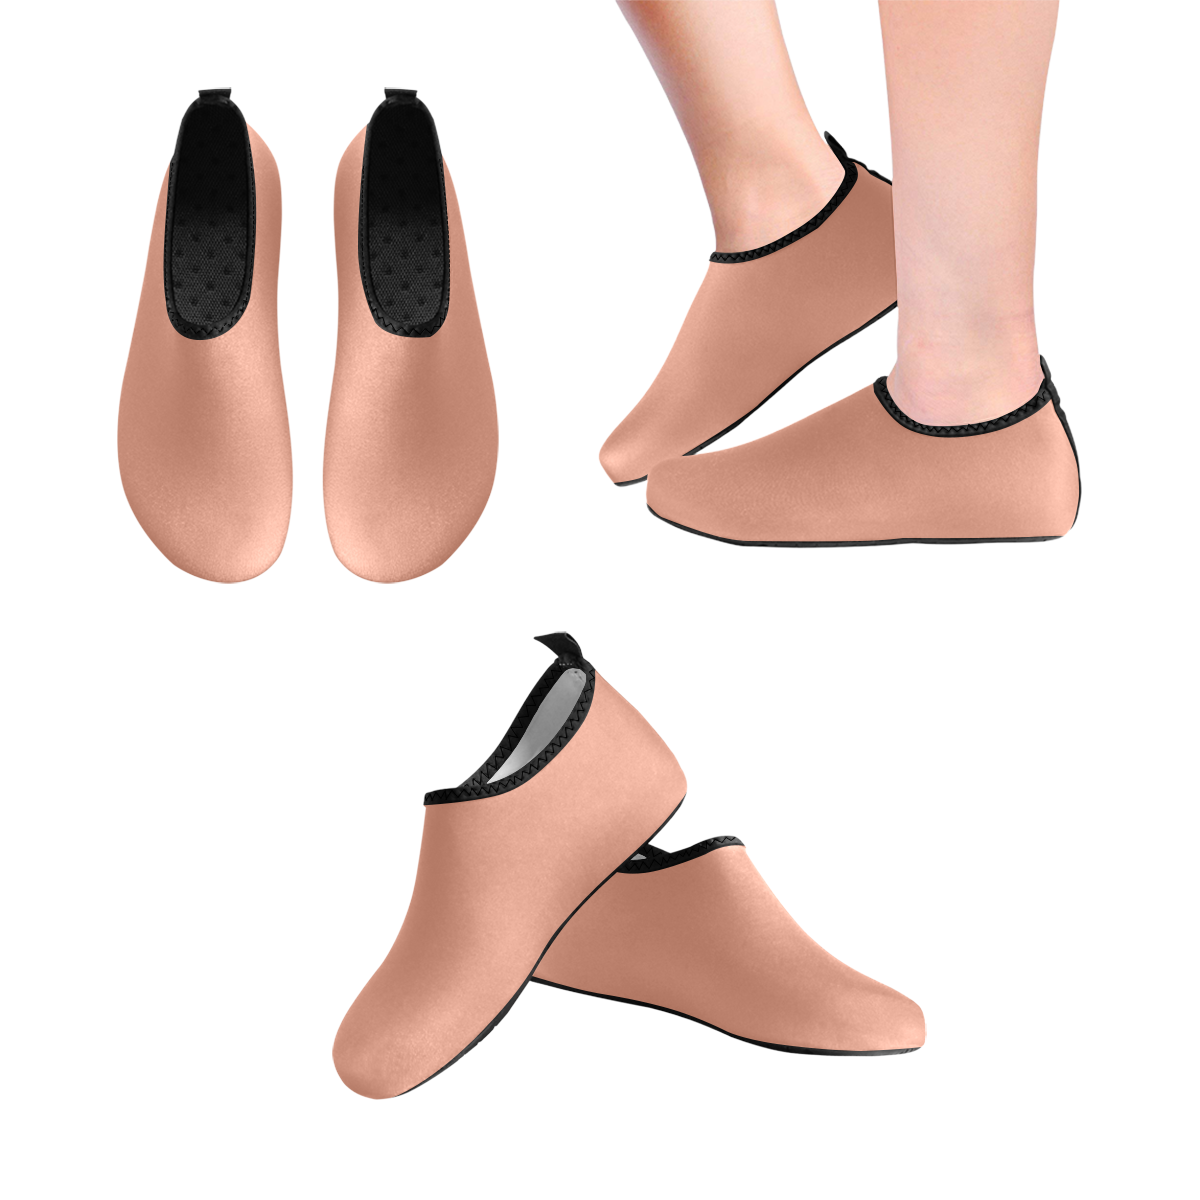 color dark salmon Men's Slip-On Water Shoes (Model 056)